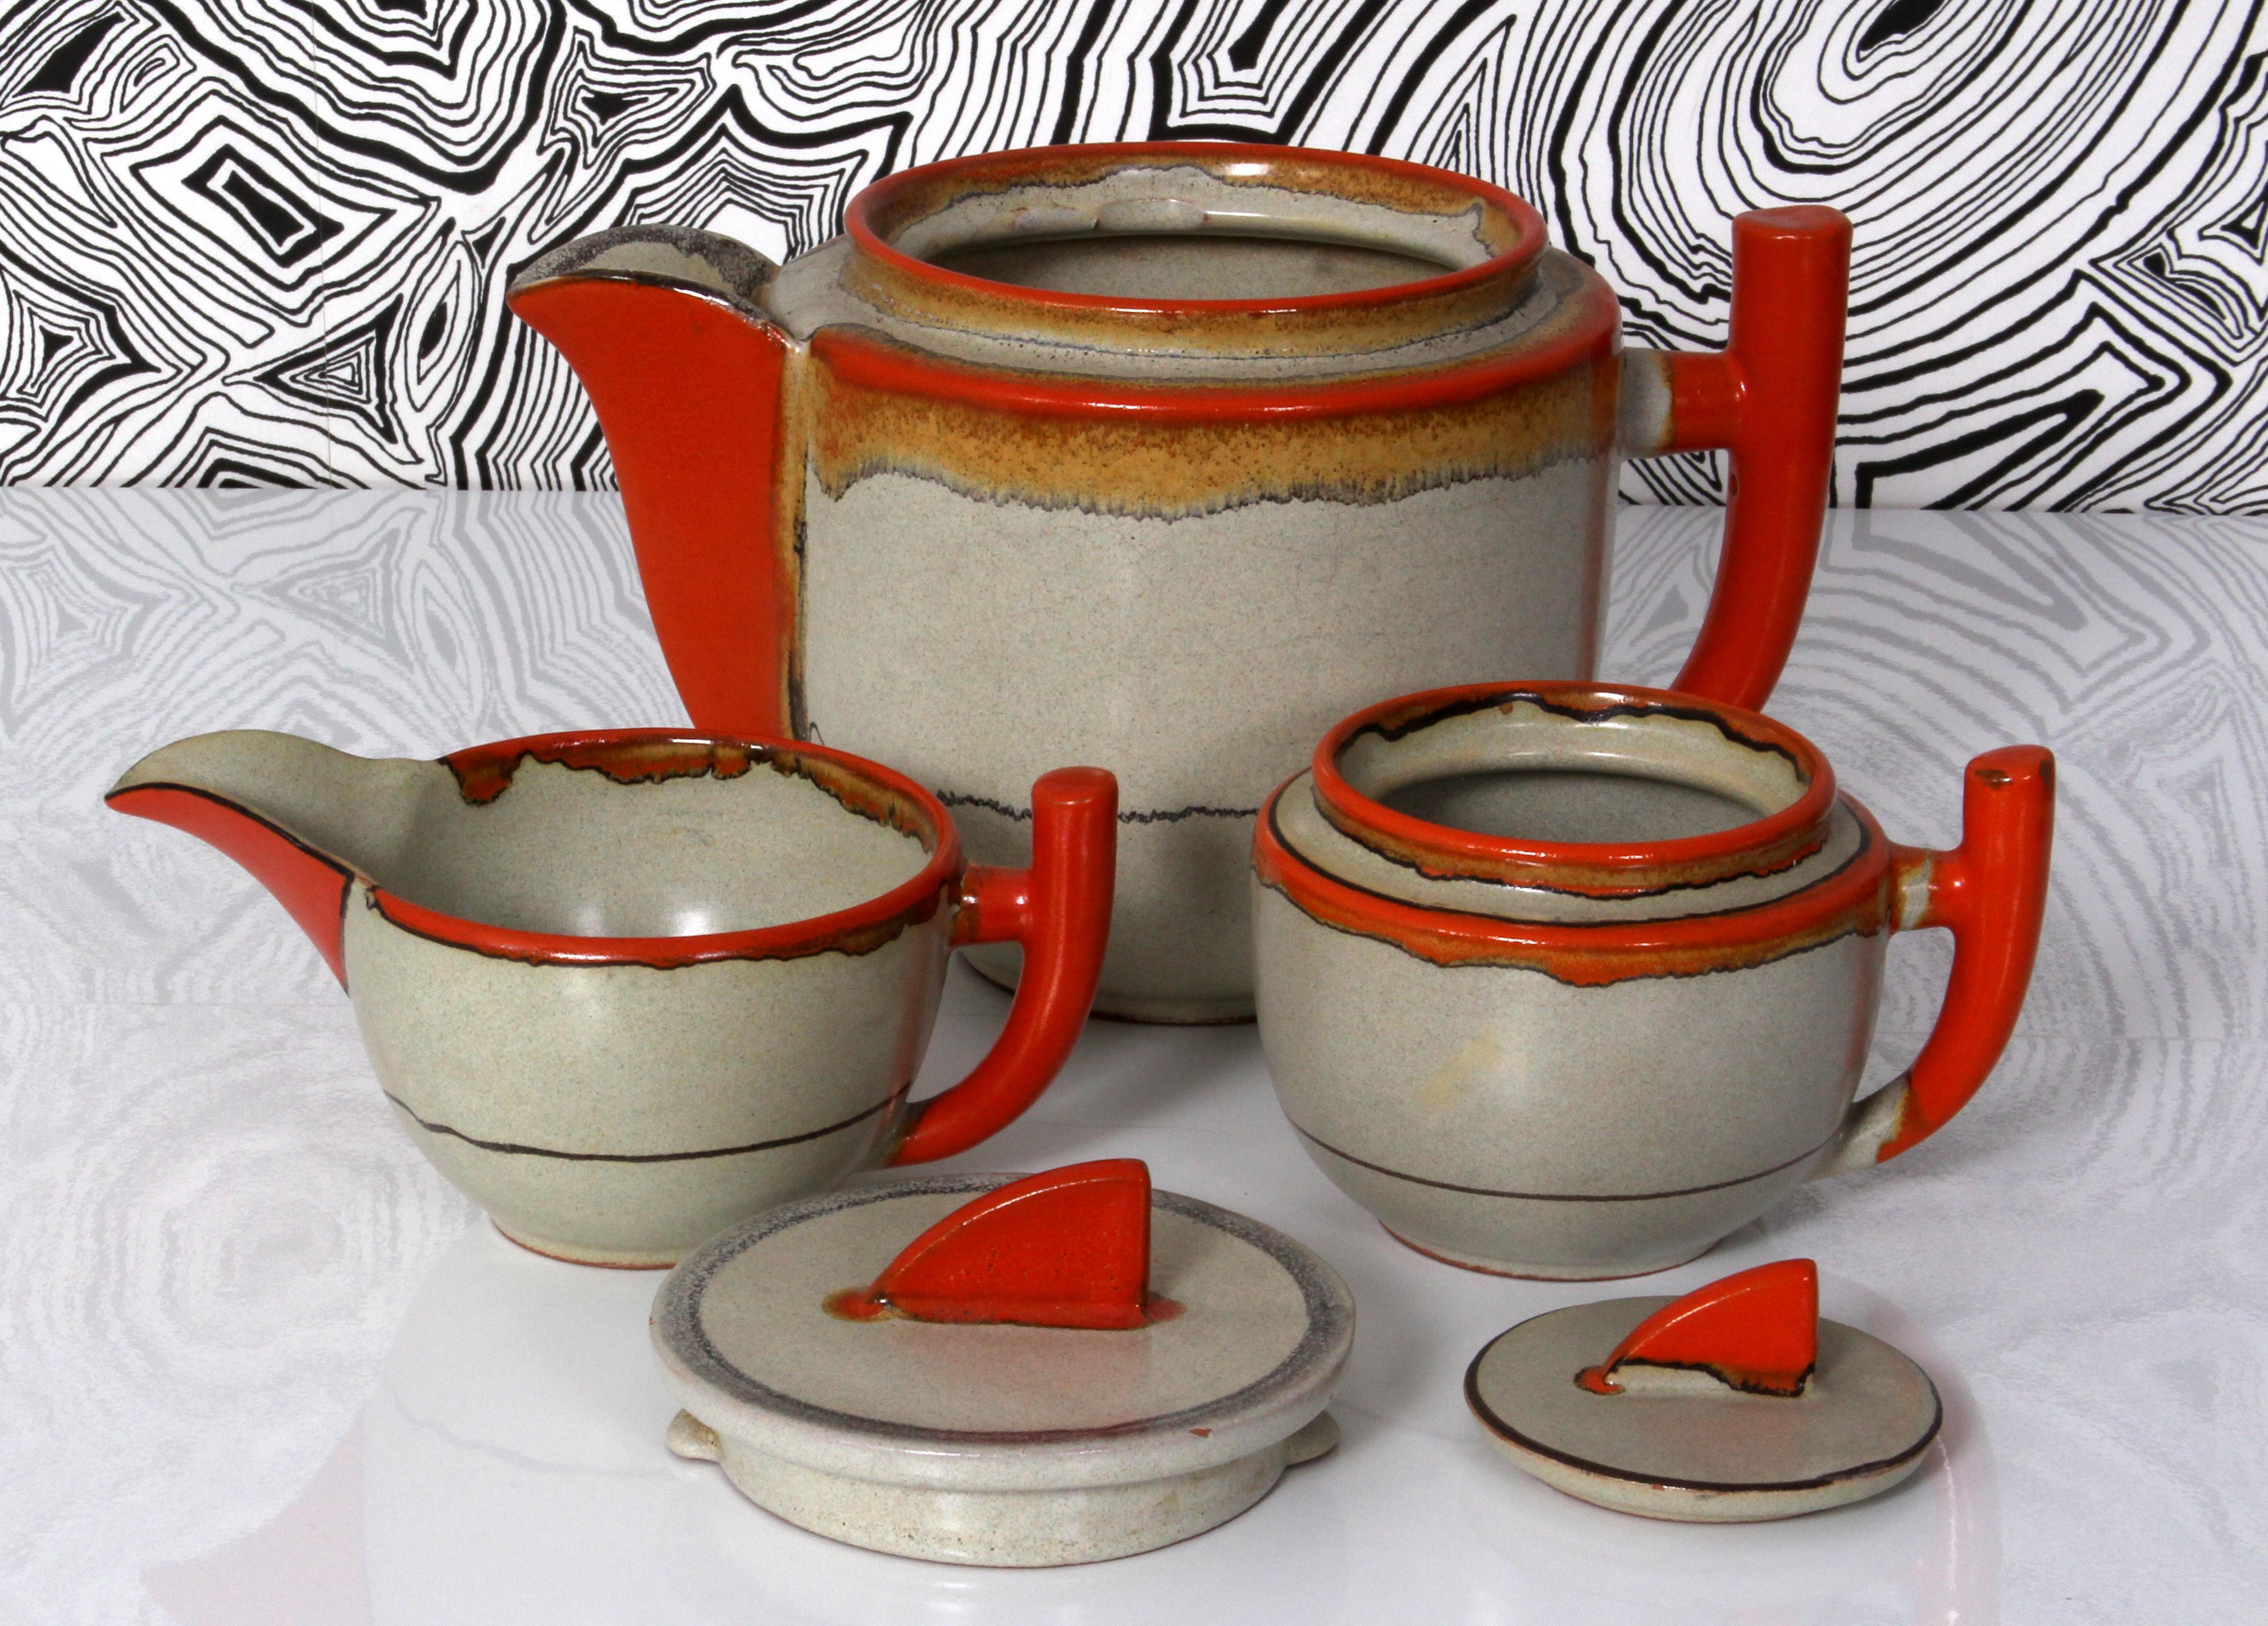 Pottery Art Deco Tea Service by Carstens Uffrecht ar 1930 uranium glaze + cups + plates  For Sale